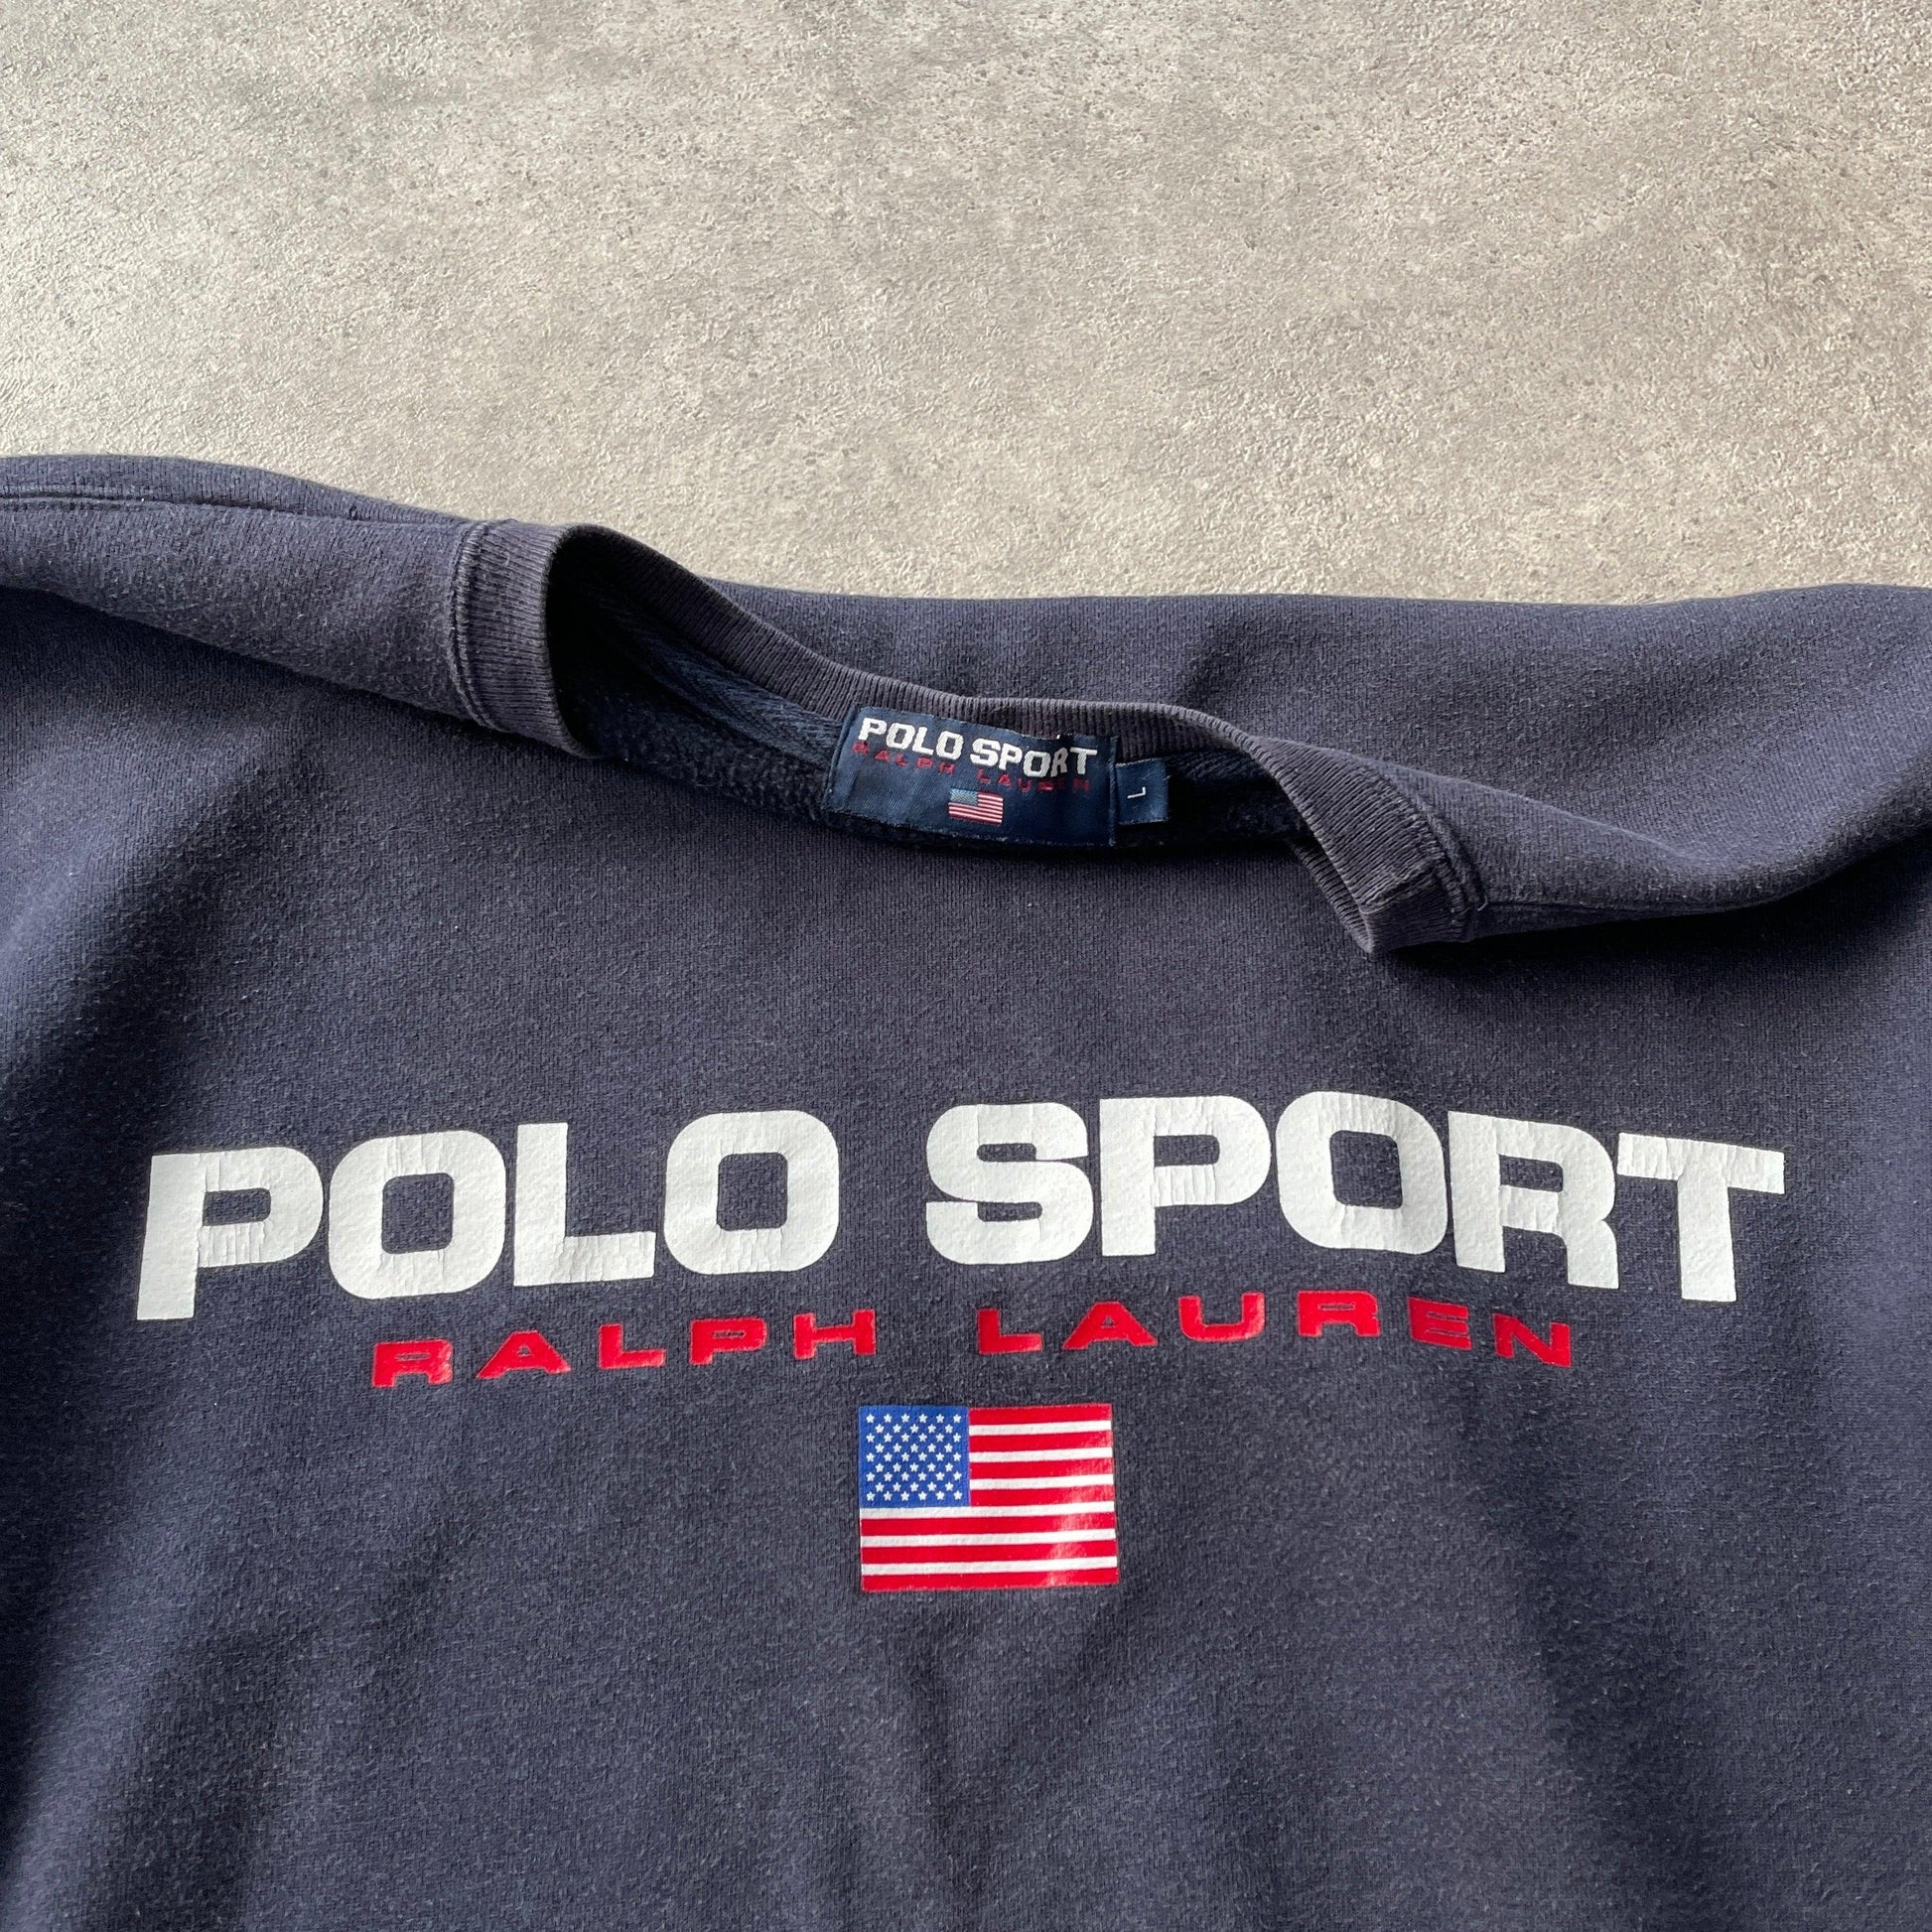 Polo Sport Ralph Lauren 1990s heavyweight sweatshirt (L) - Known Source